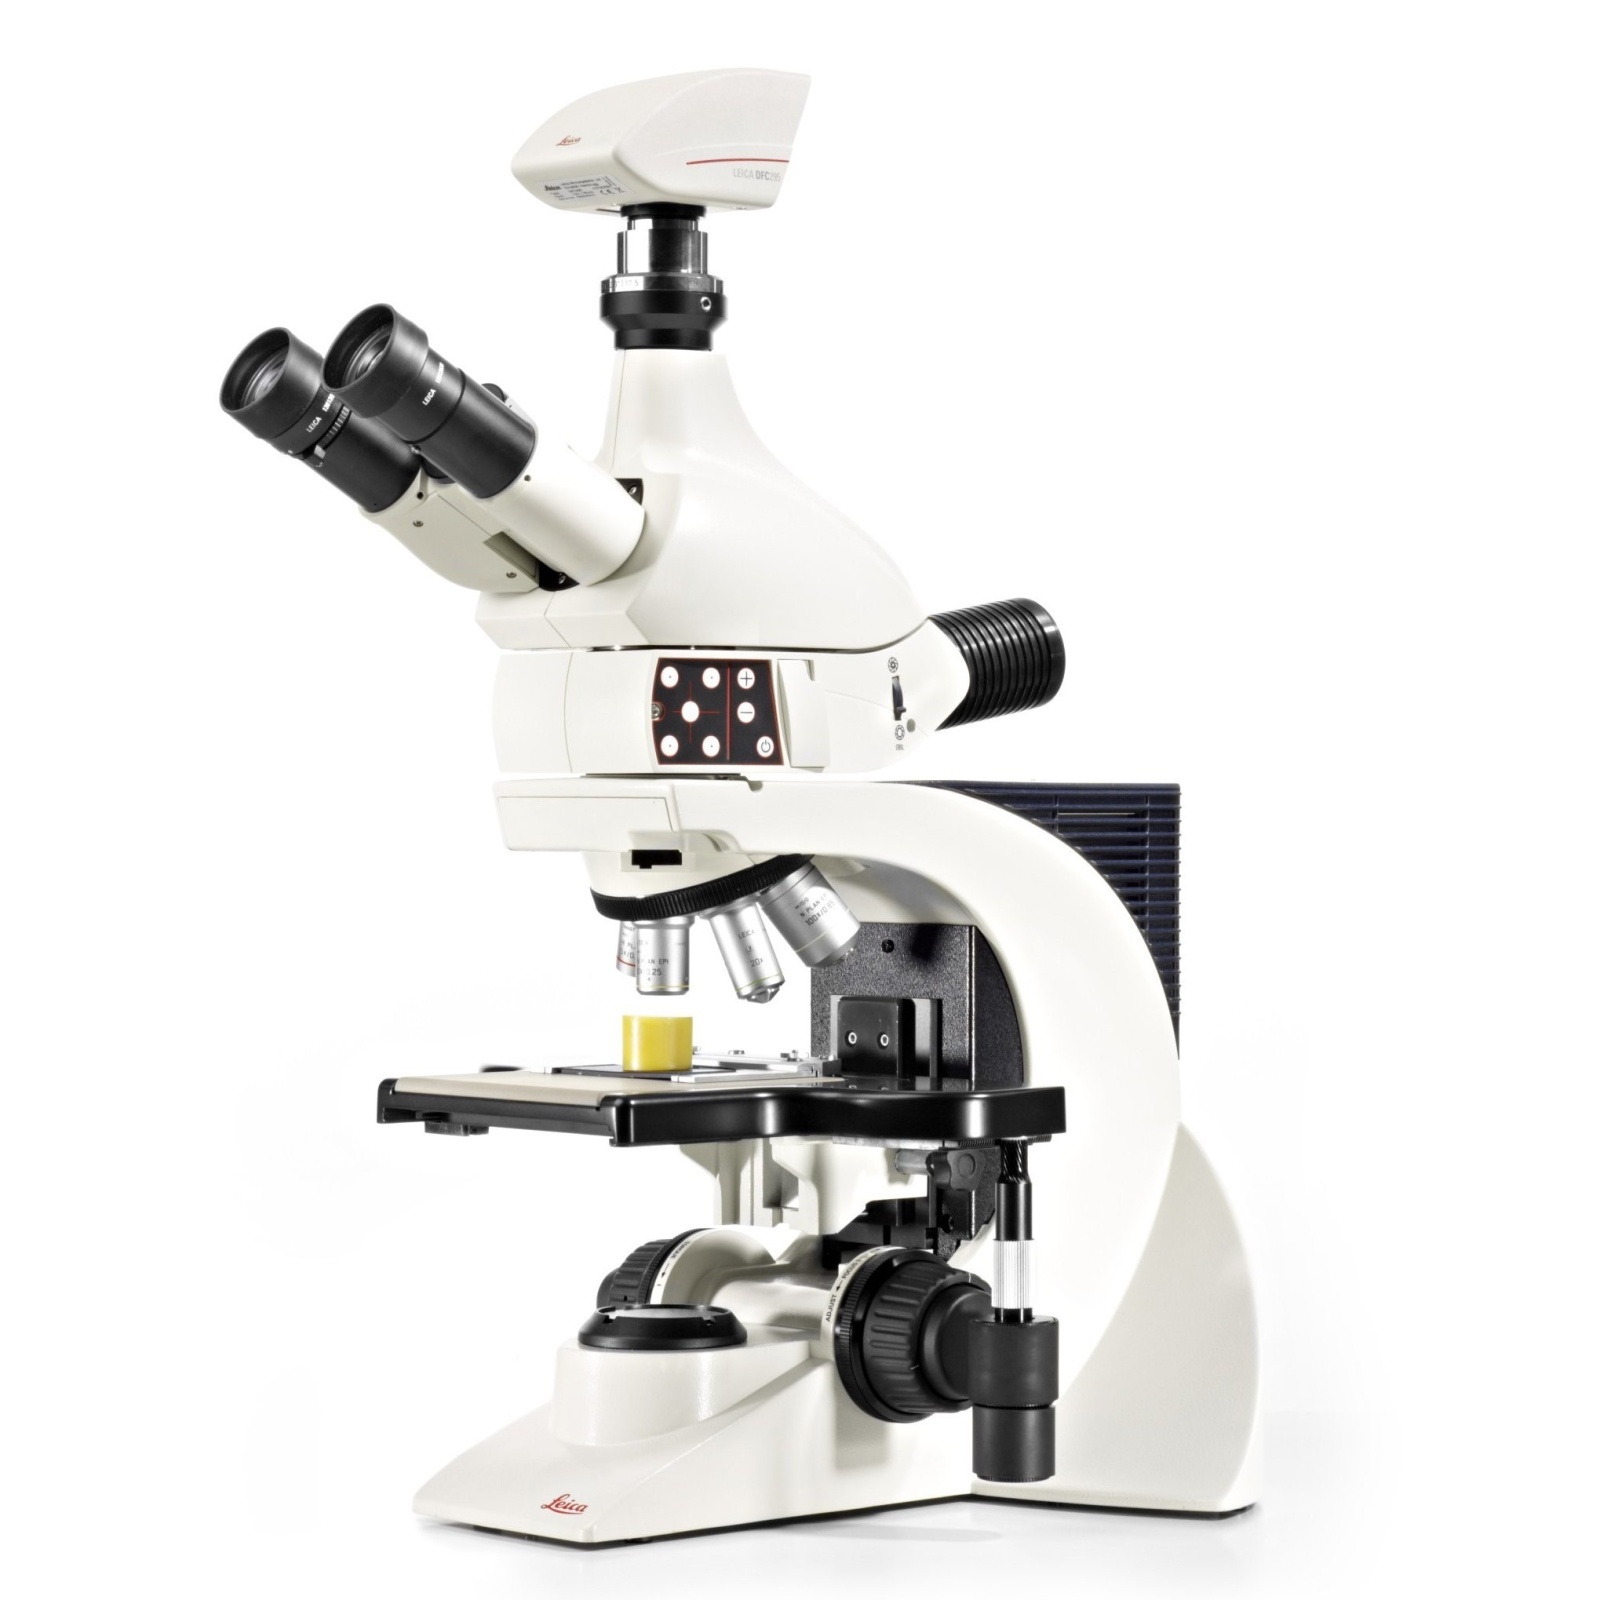 Leica DM1750 M金相显微镜的图片